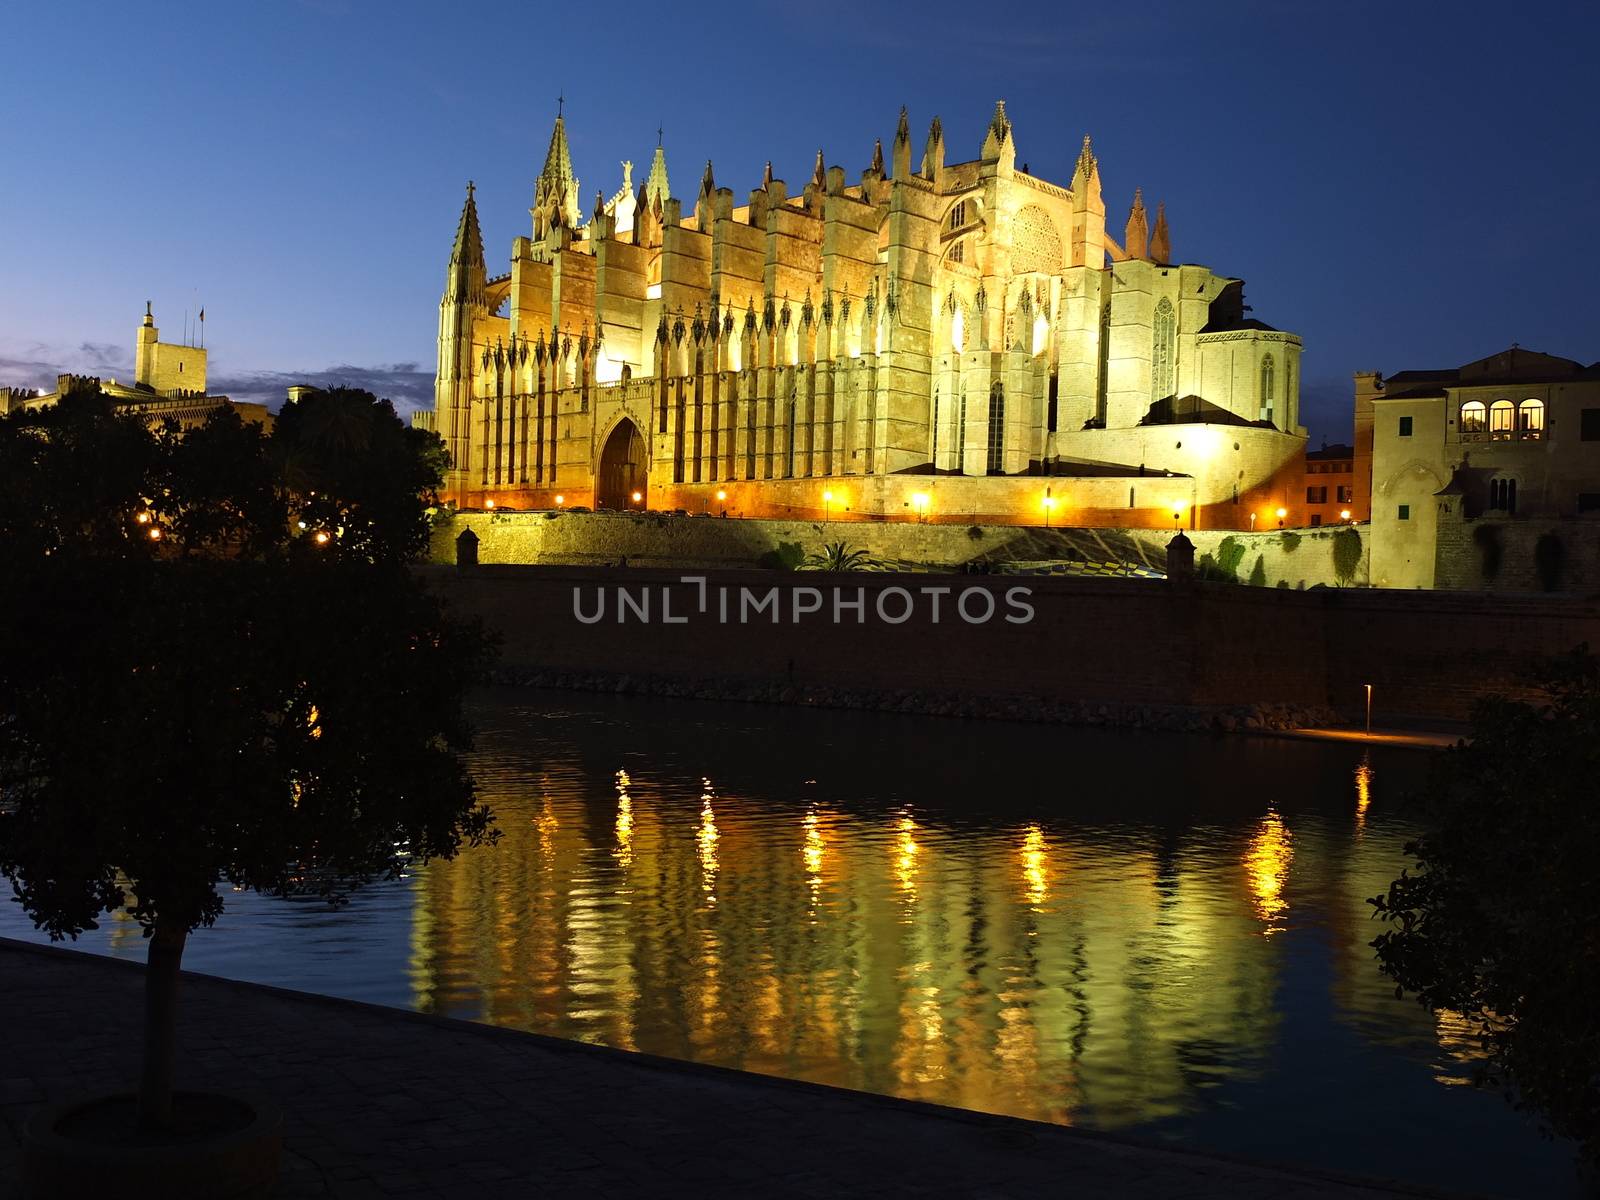 Cathedral of la Seu Mallorca at Palma de Mallorca, Balearic islands in Spain. Night scene with reflection over fountain.